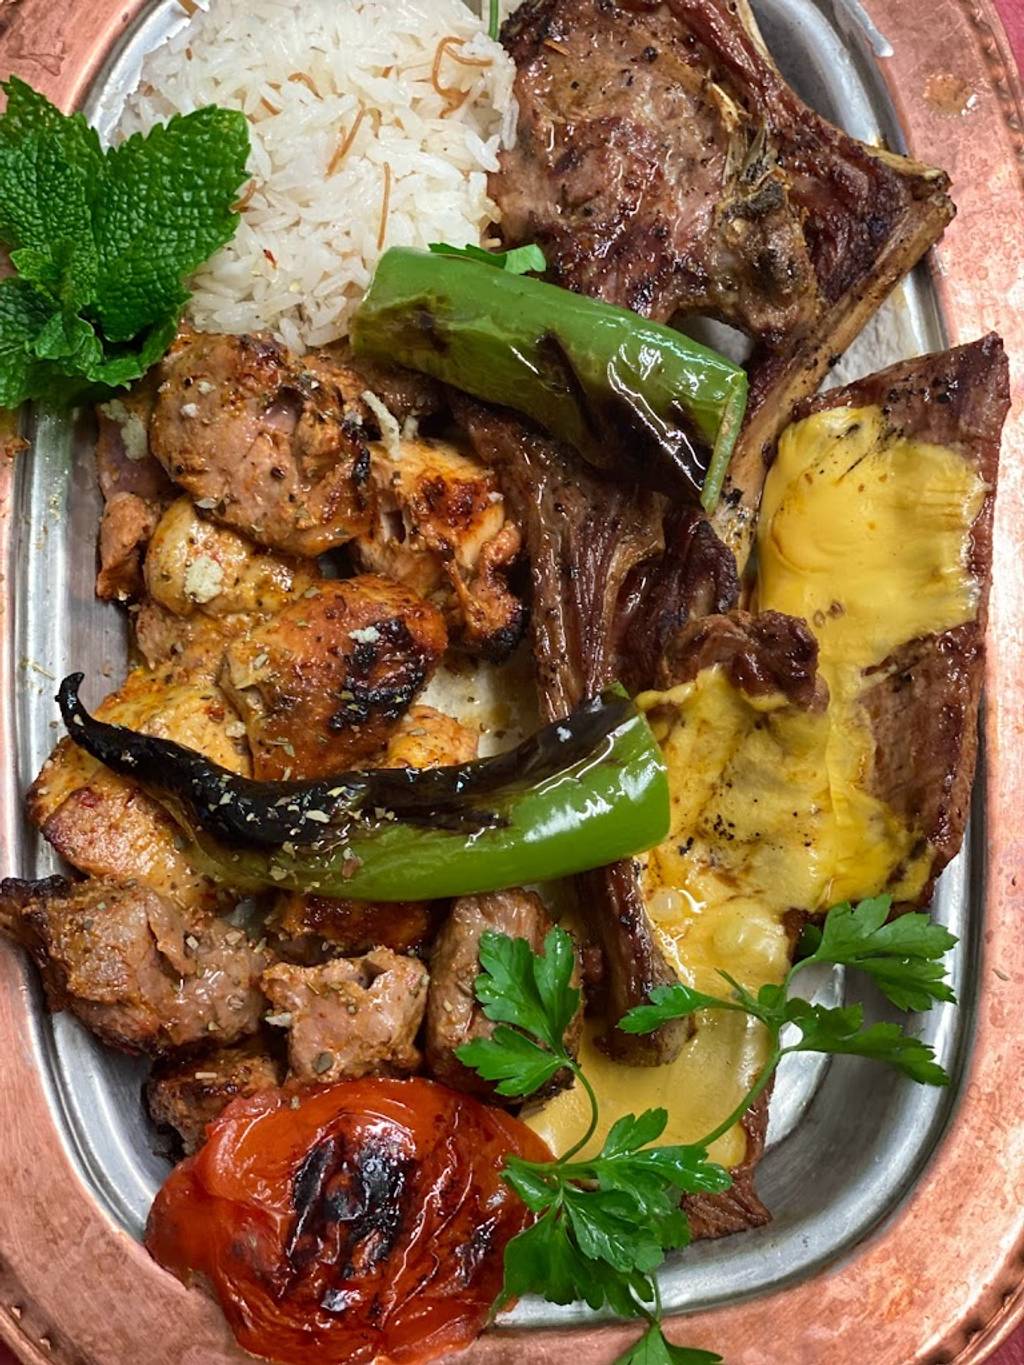 Palace Restaurants turc Halal grill Vénissieux - Food Tableware Ingredient Recipe Cuisine